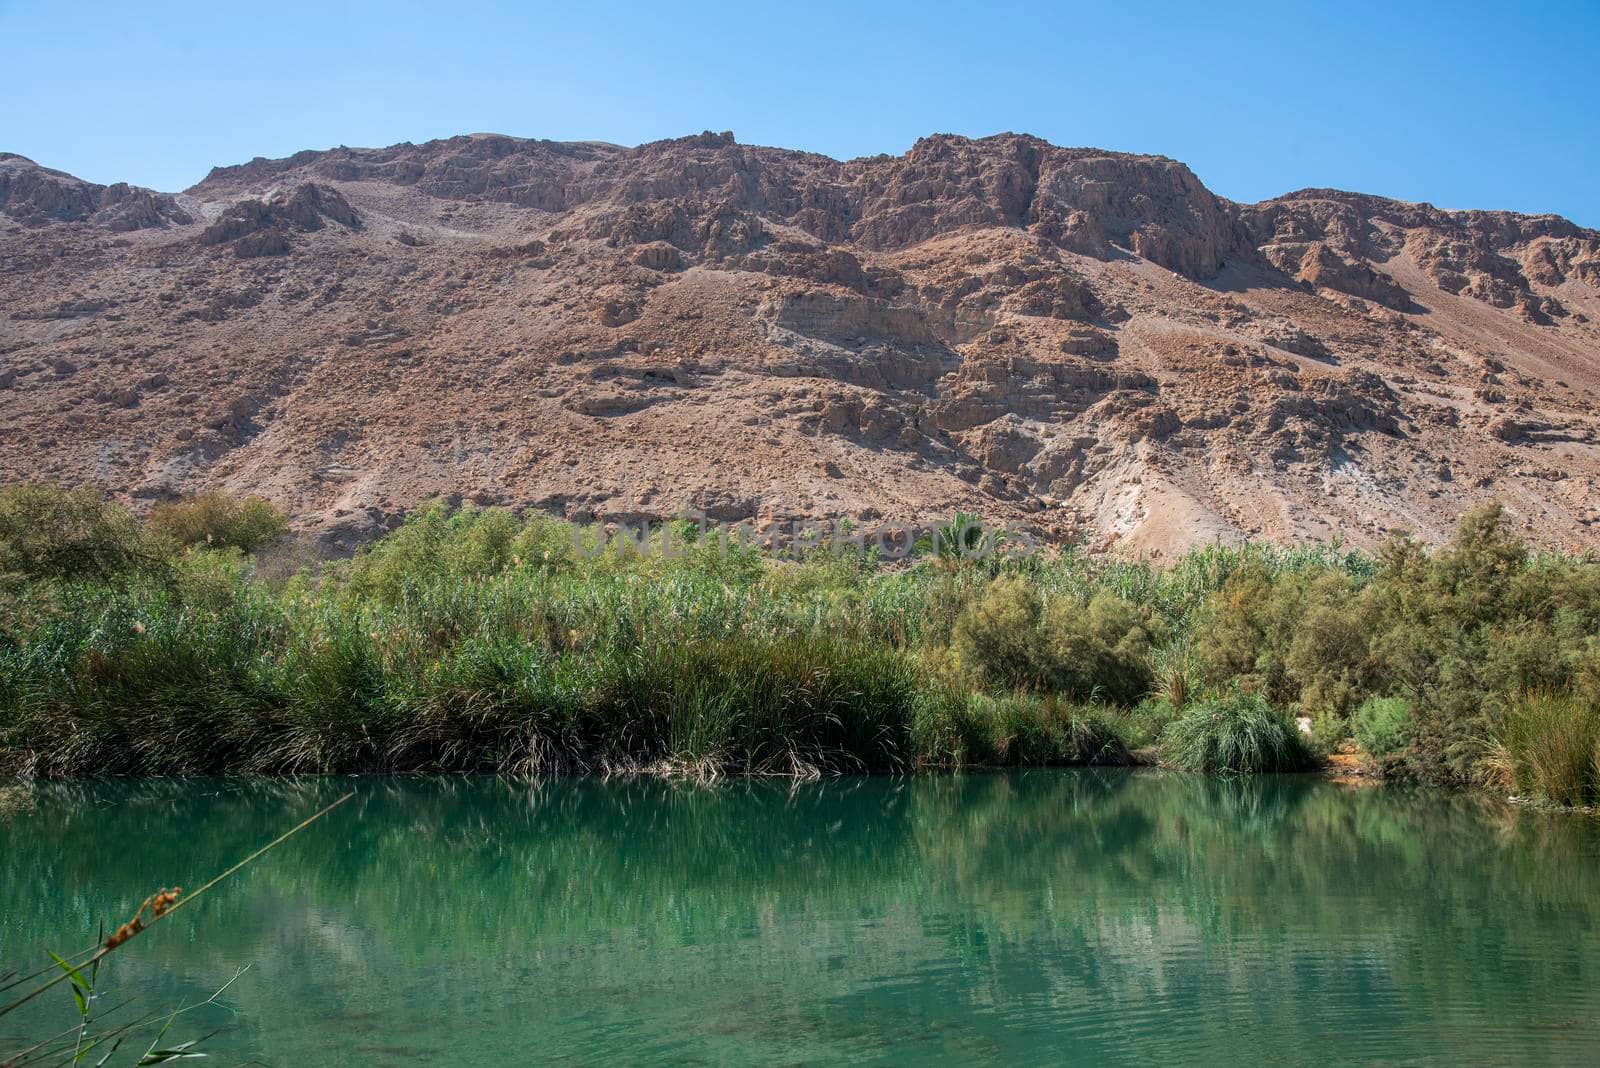 An oasis near the Dead Sea. A tropical nature reserve in the desert. Einot Tsukim, Ein Feshkha. High quality photo